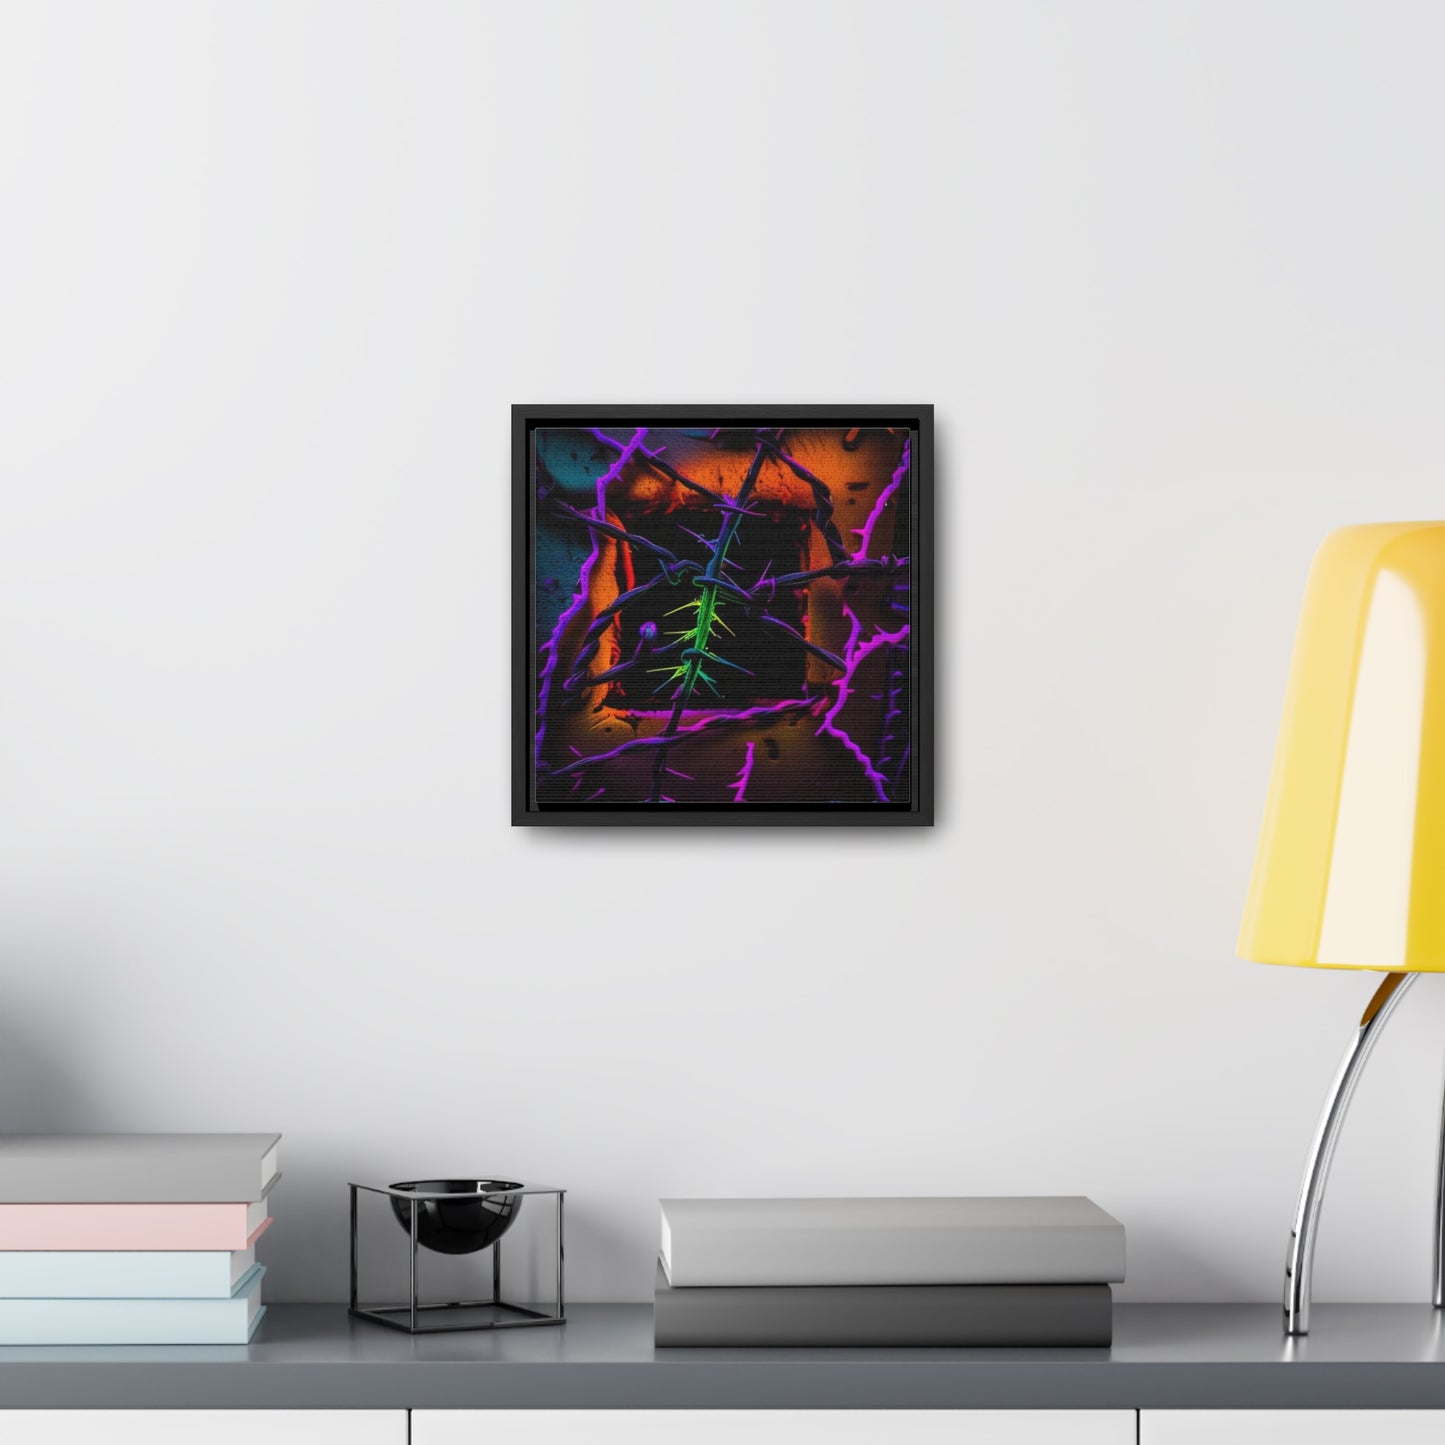 Gallery Canvas Wraps, Square Frame Macro Neon Barbs 1